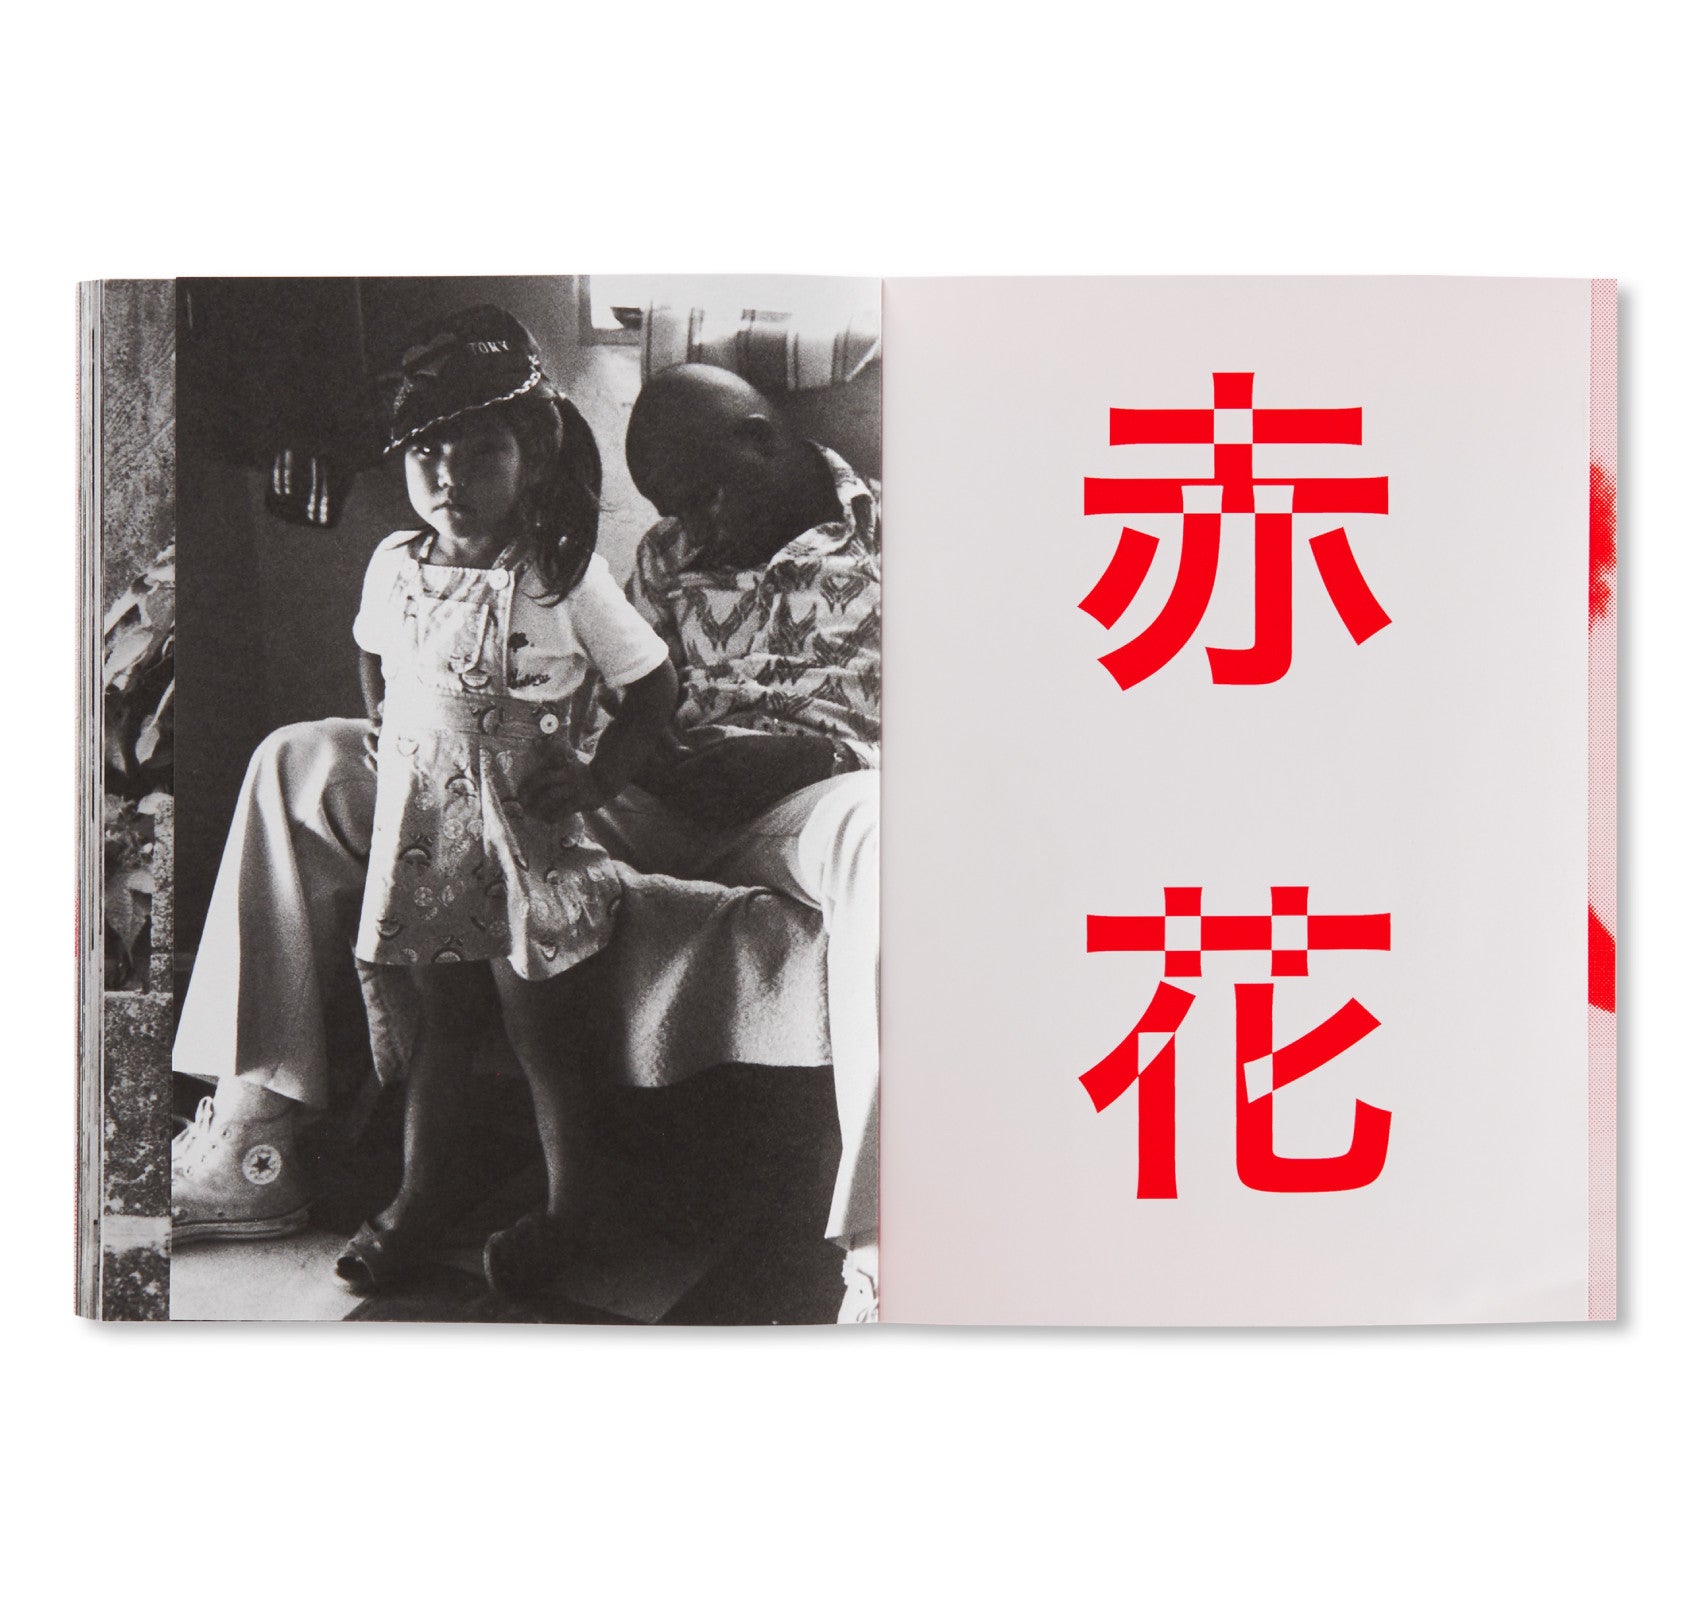 RED FLOWER, THE WOMEN OF OKINAWA / 赤花 アカバナー、沖縄の女 by Mao Ishikawa [SECOND EDITION]